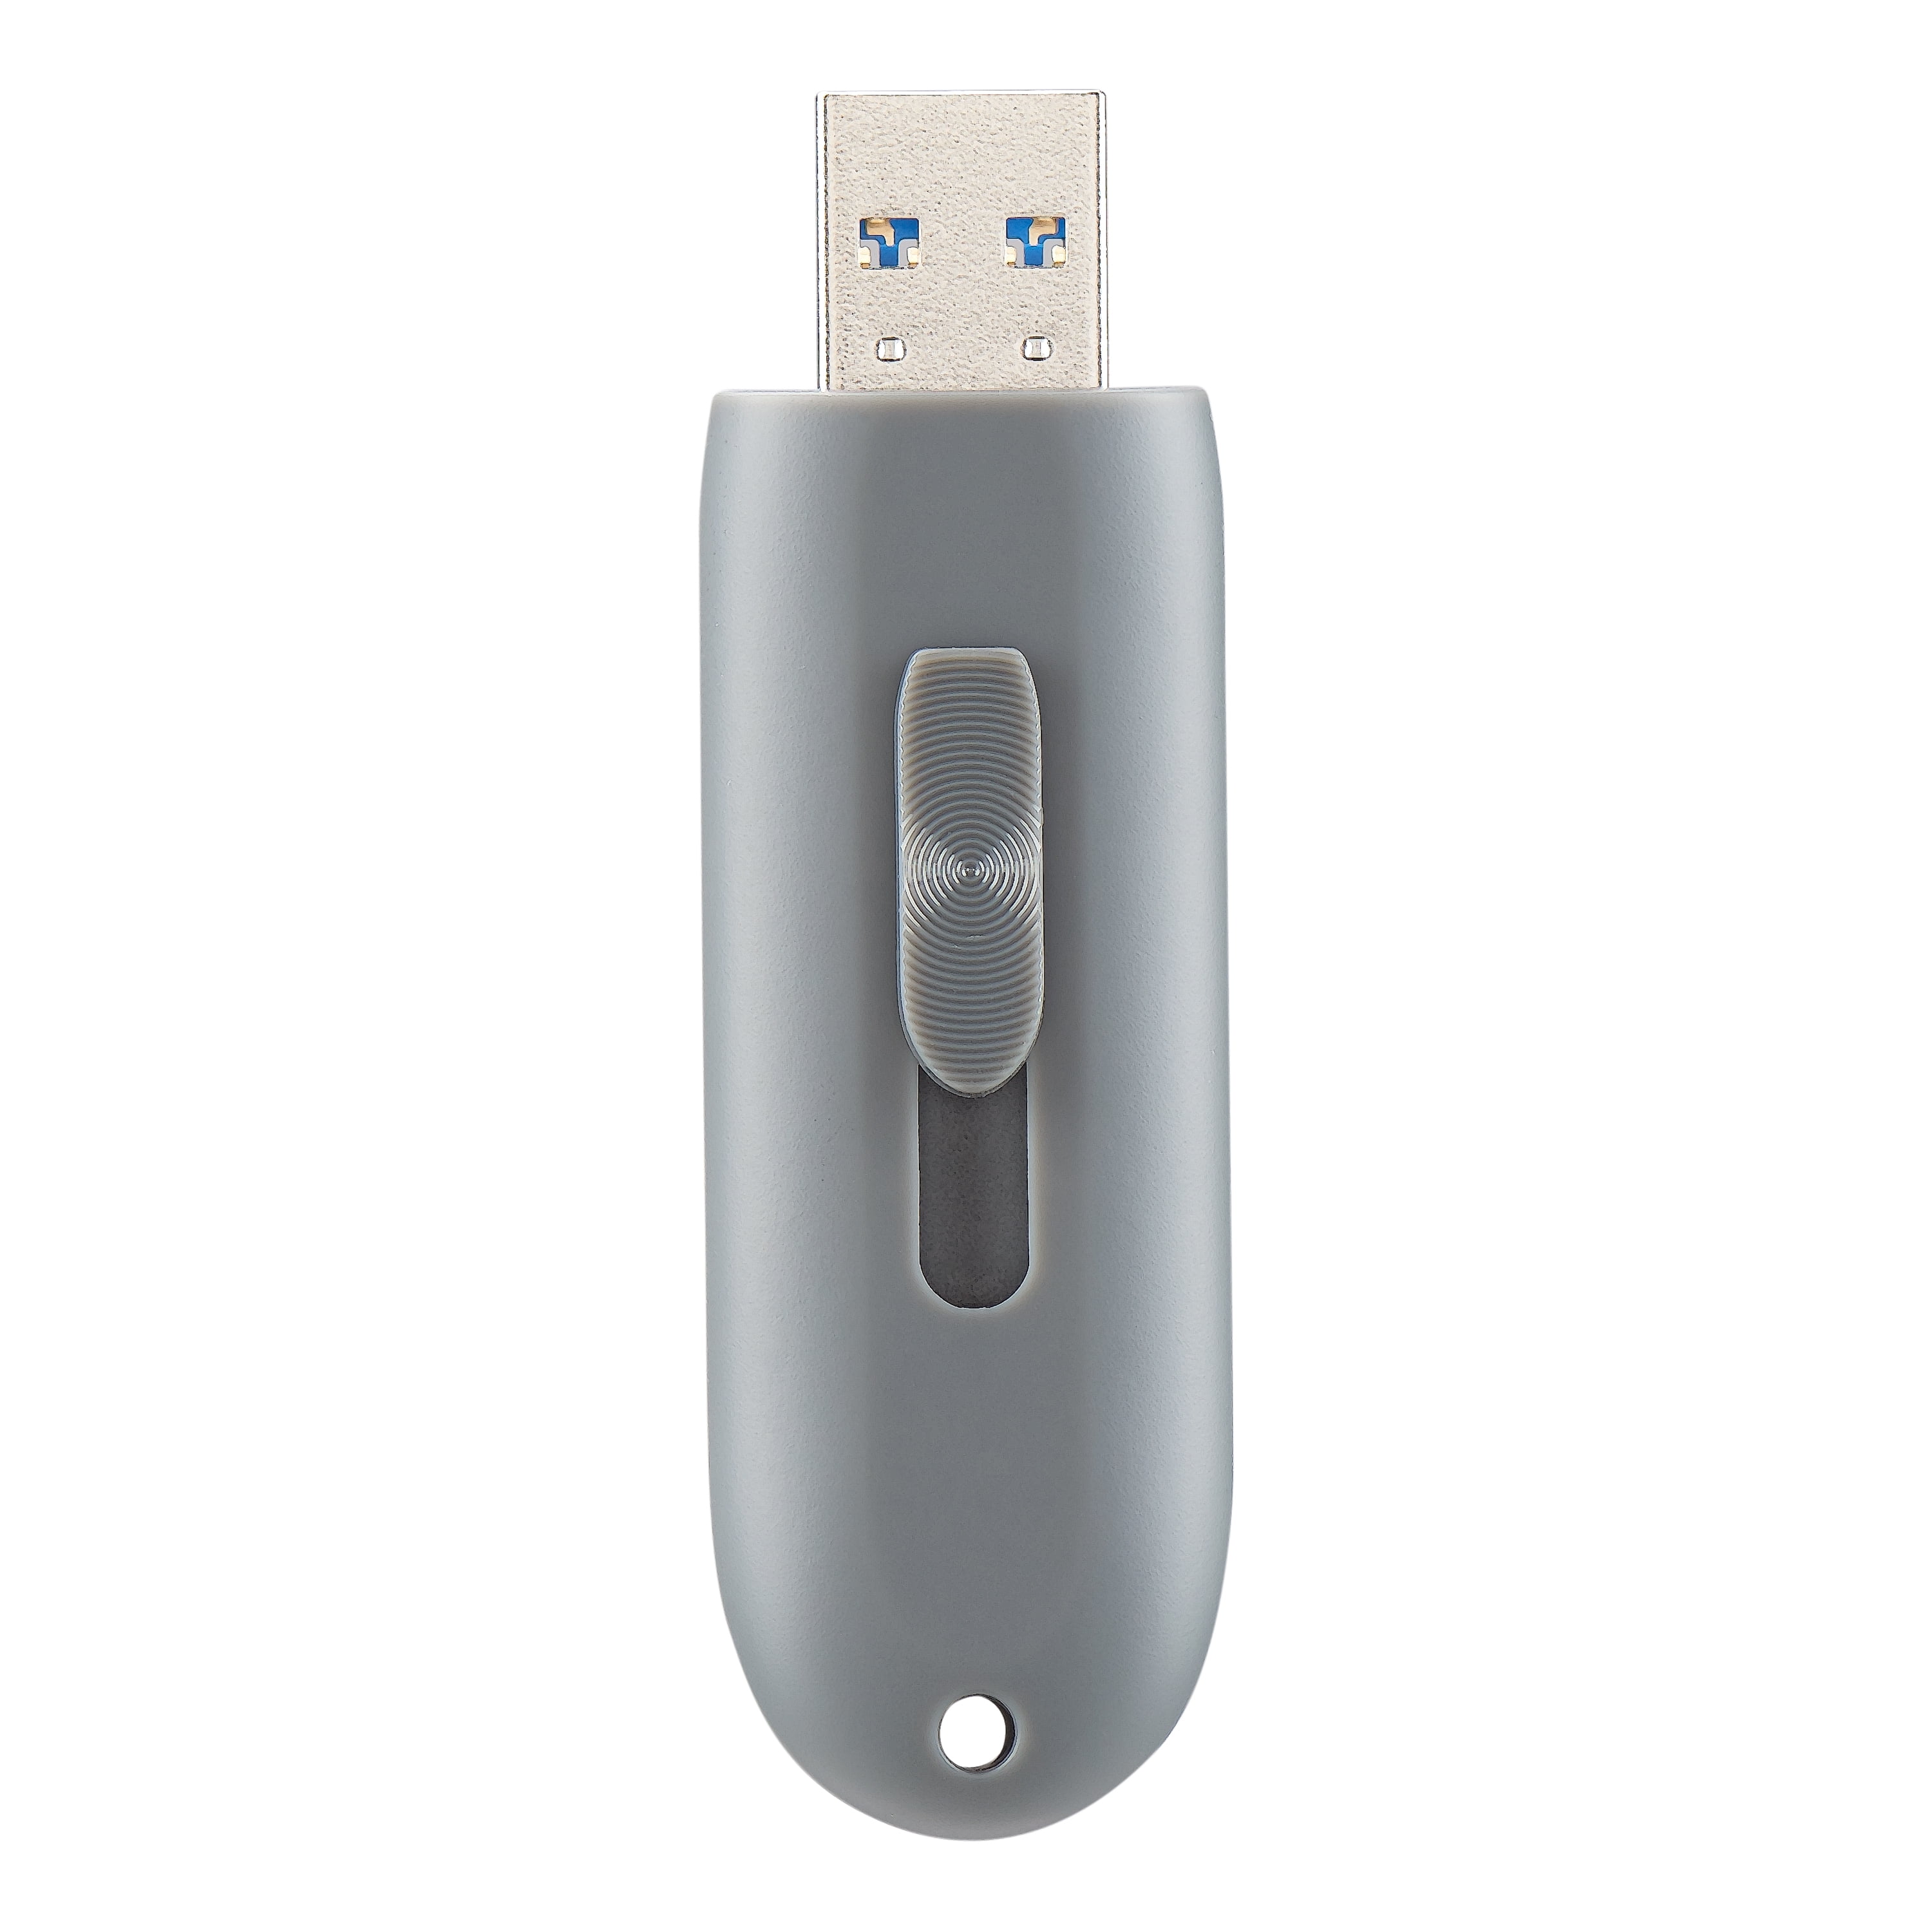 onn. USB 3.0 Flash Drive, GB Capacity Walmart.com